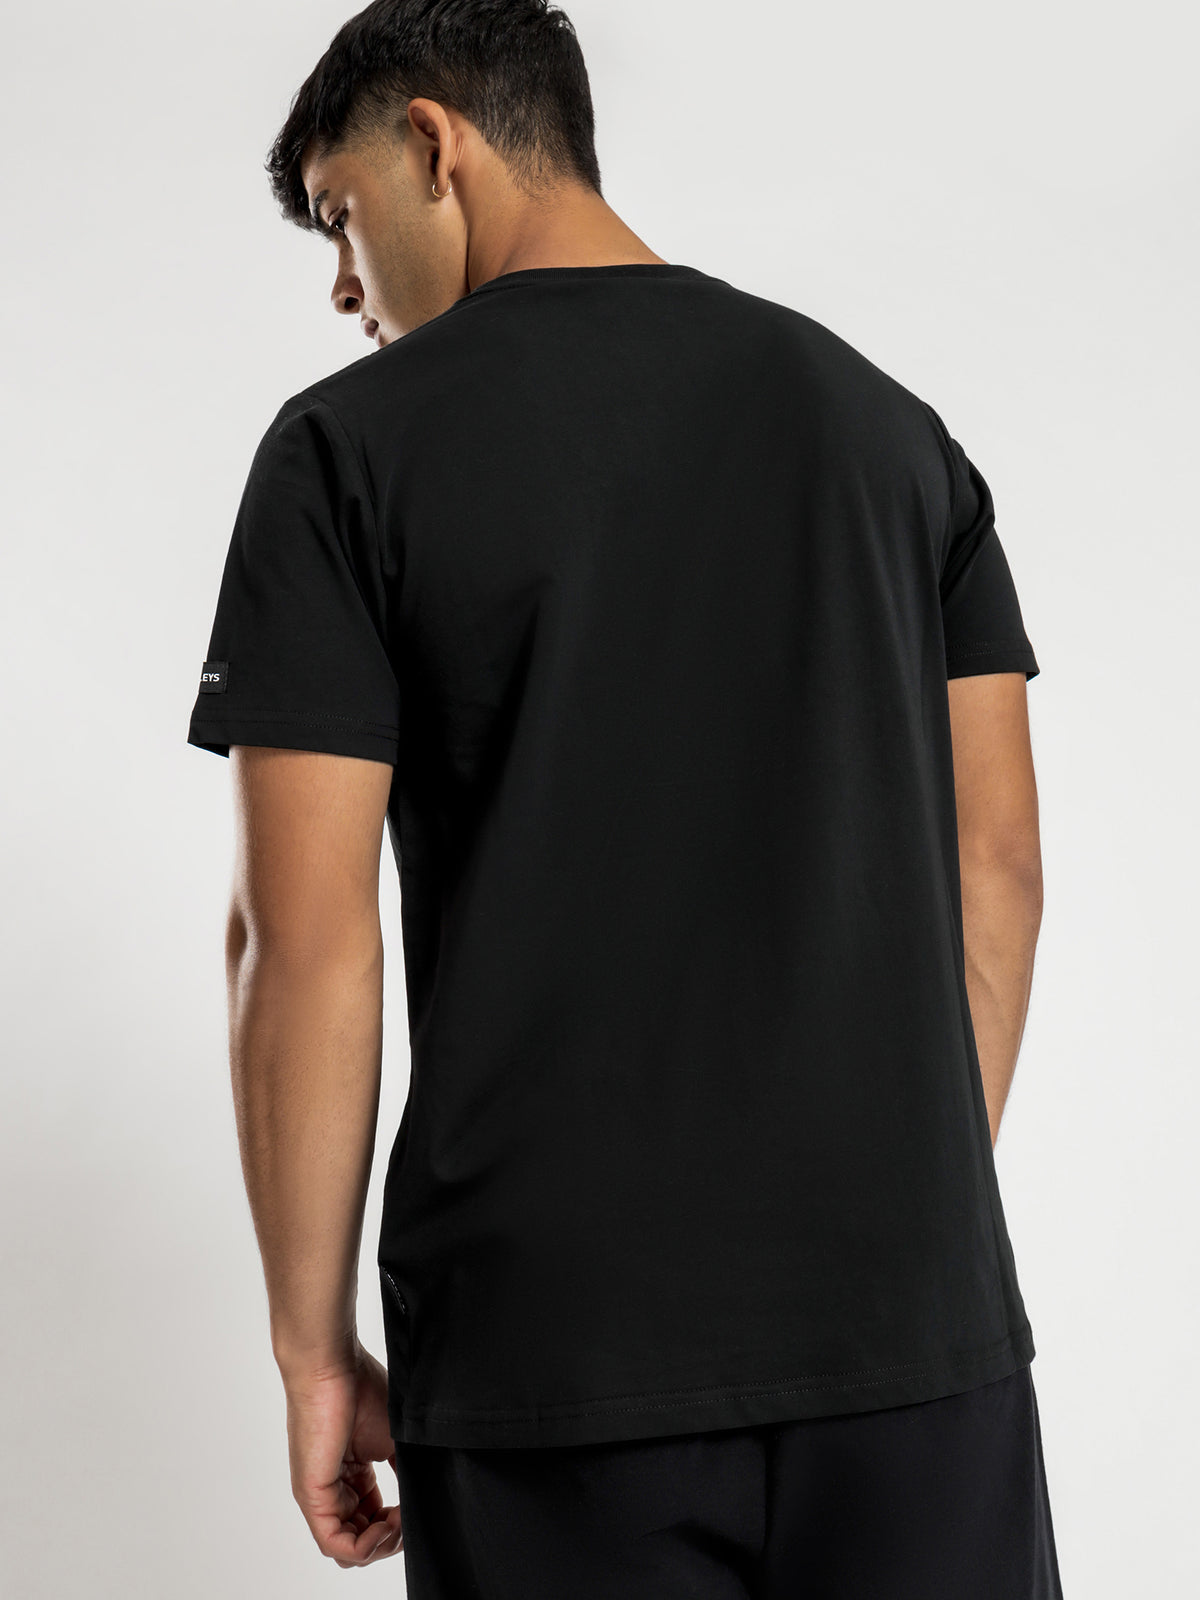 Lopez T-Shirt in Black - Glue Store